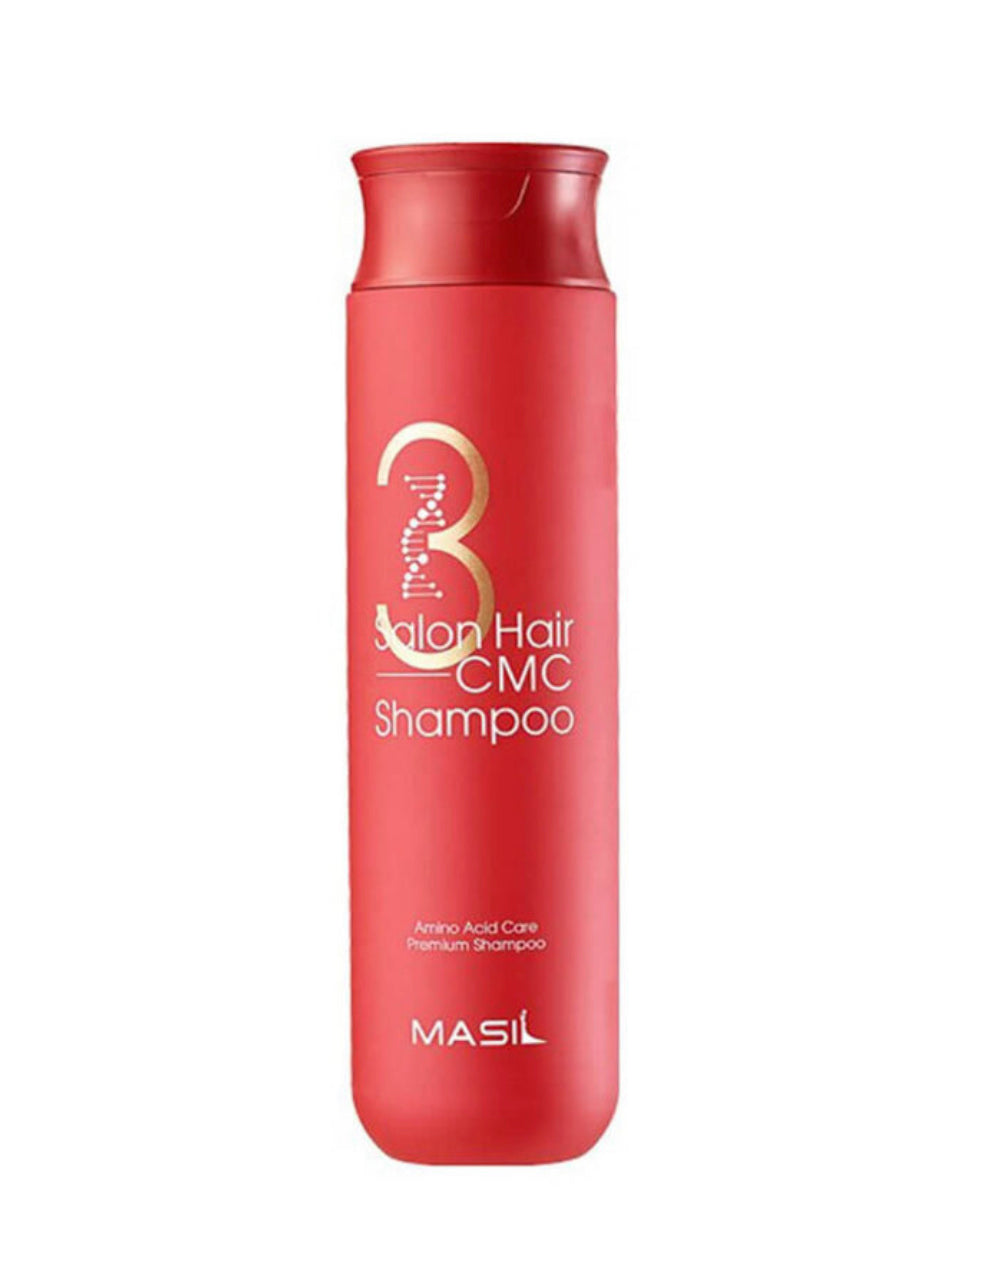 Masil 3 Salon Hair CMC Shampoo 300ml (without package) (sale)